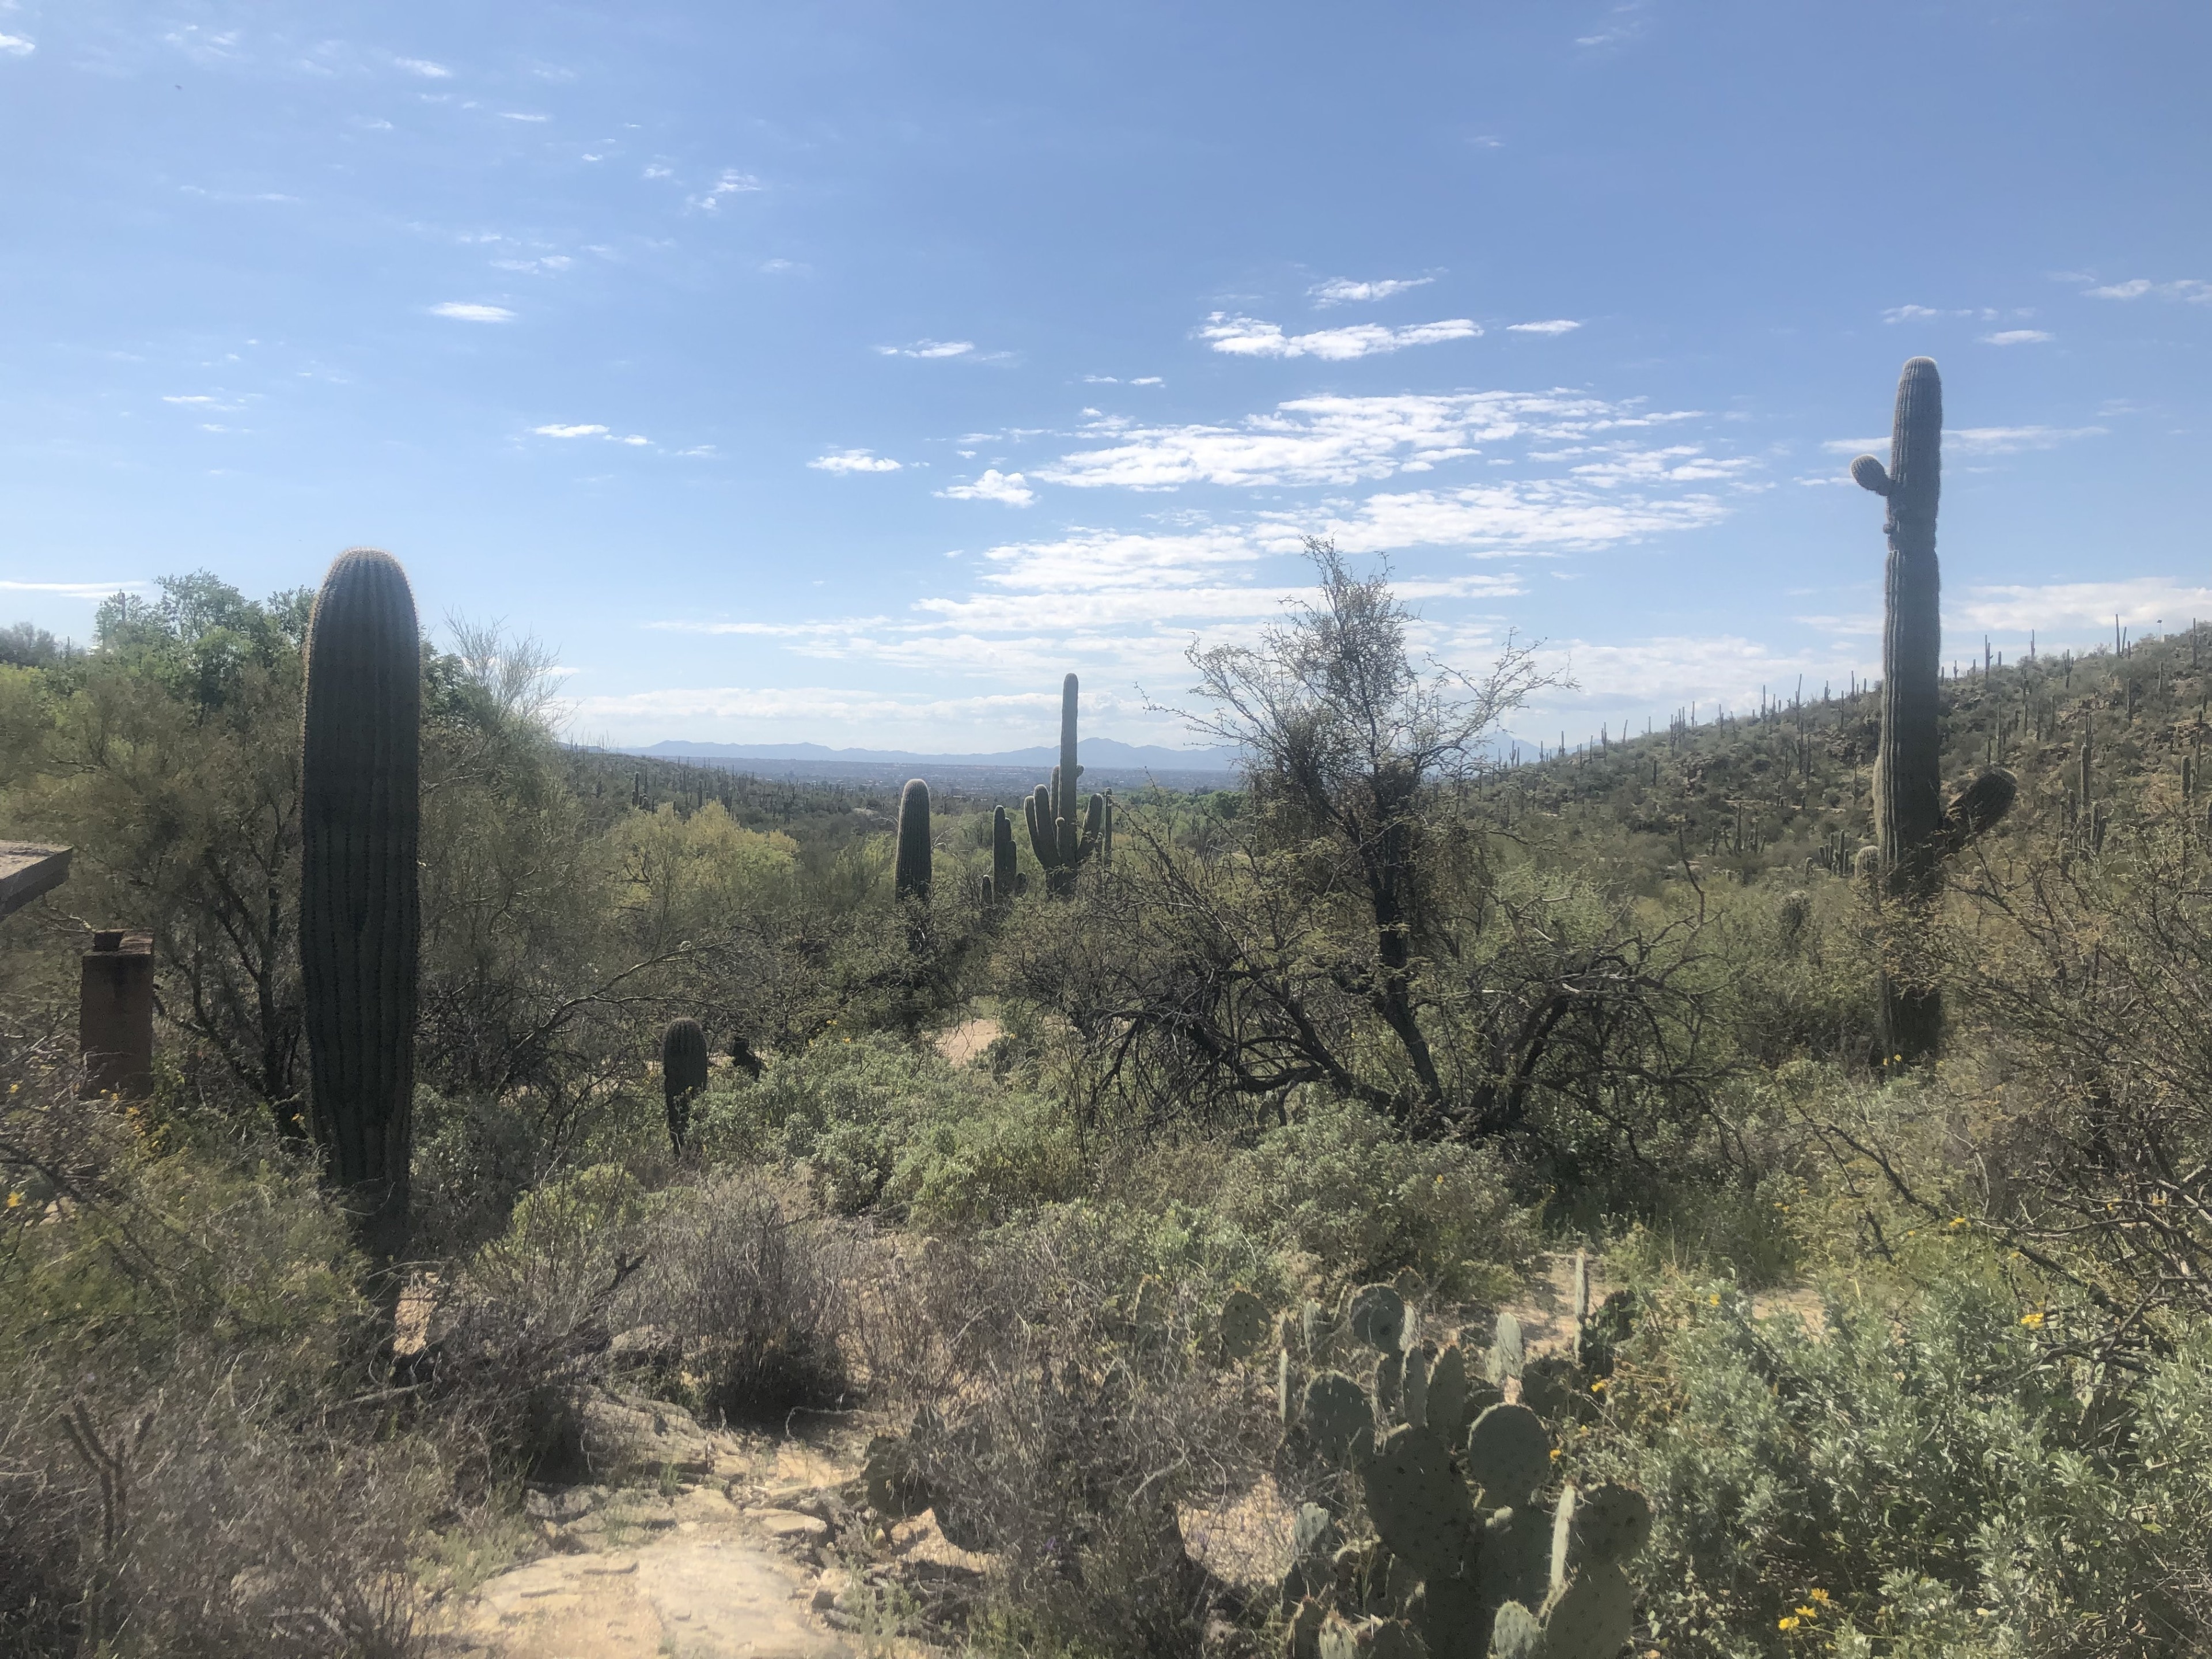 Sabino Canyon, Tucson, Arizona, United States of America